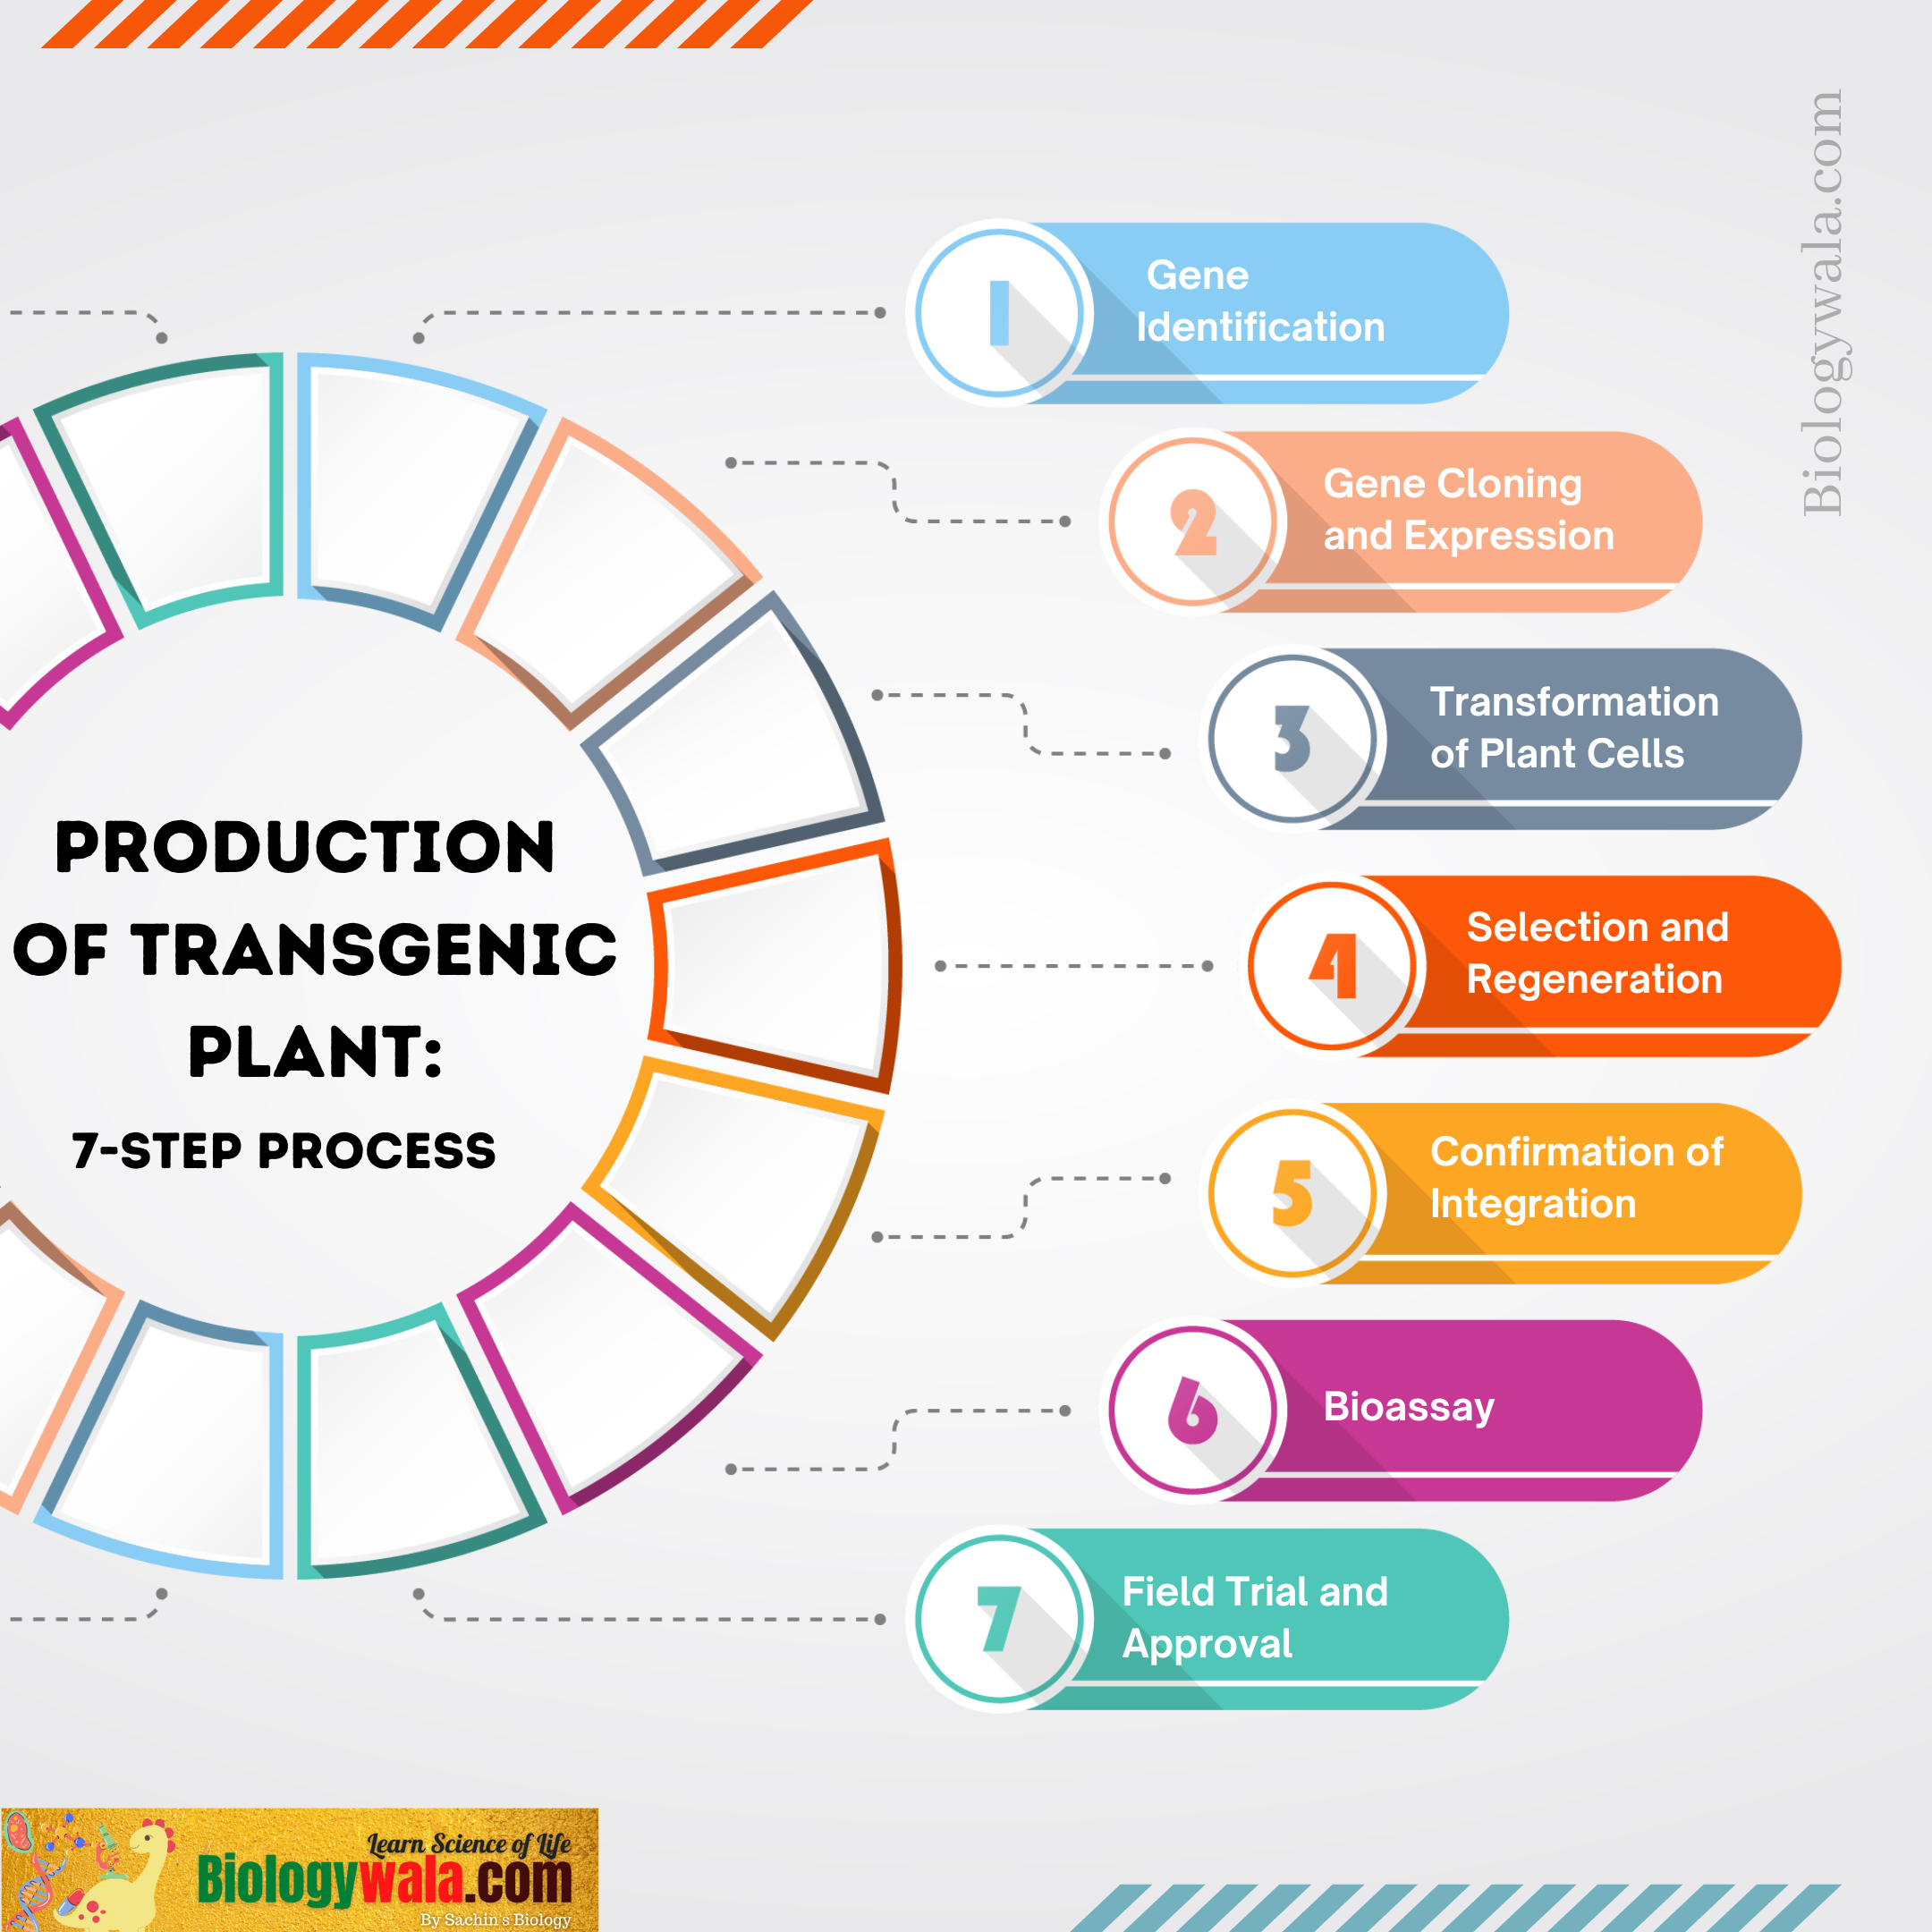 Production of transgenic plant